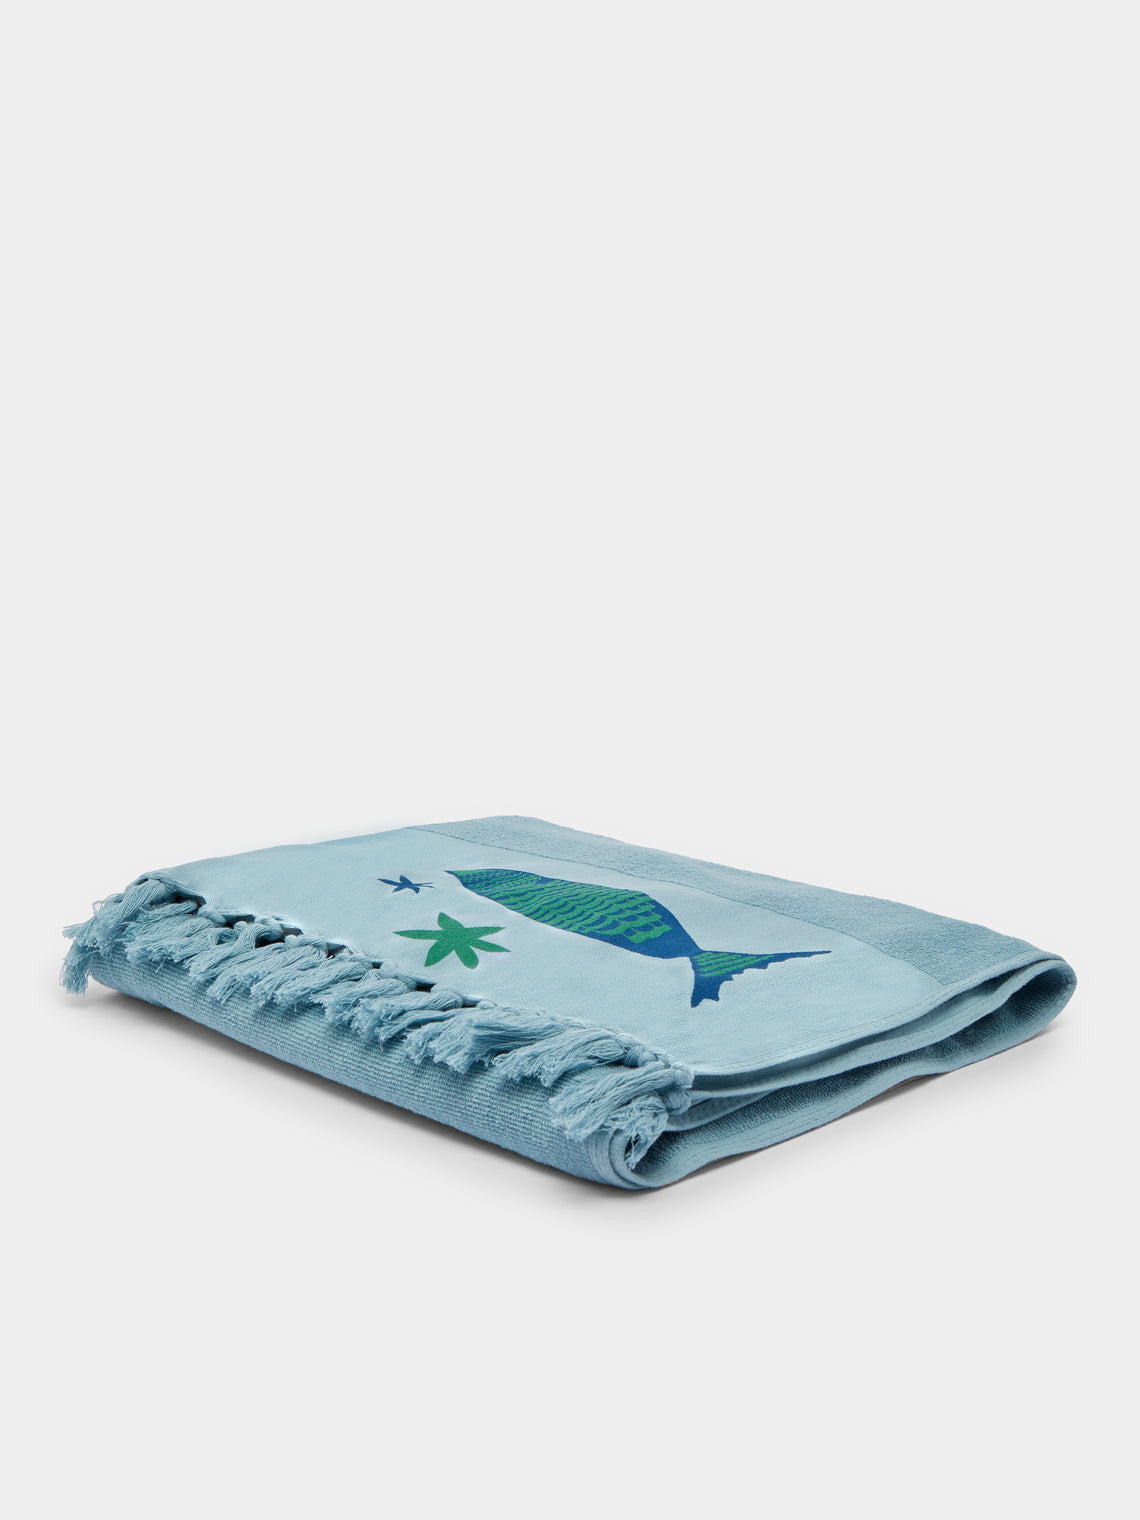 Malaika - Big Fish Hand-Printed Cotton Beach Towels (Set of 2) -  - ABASK